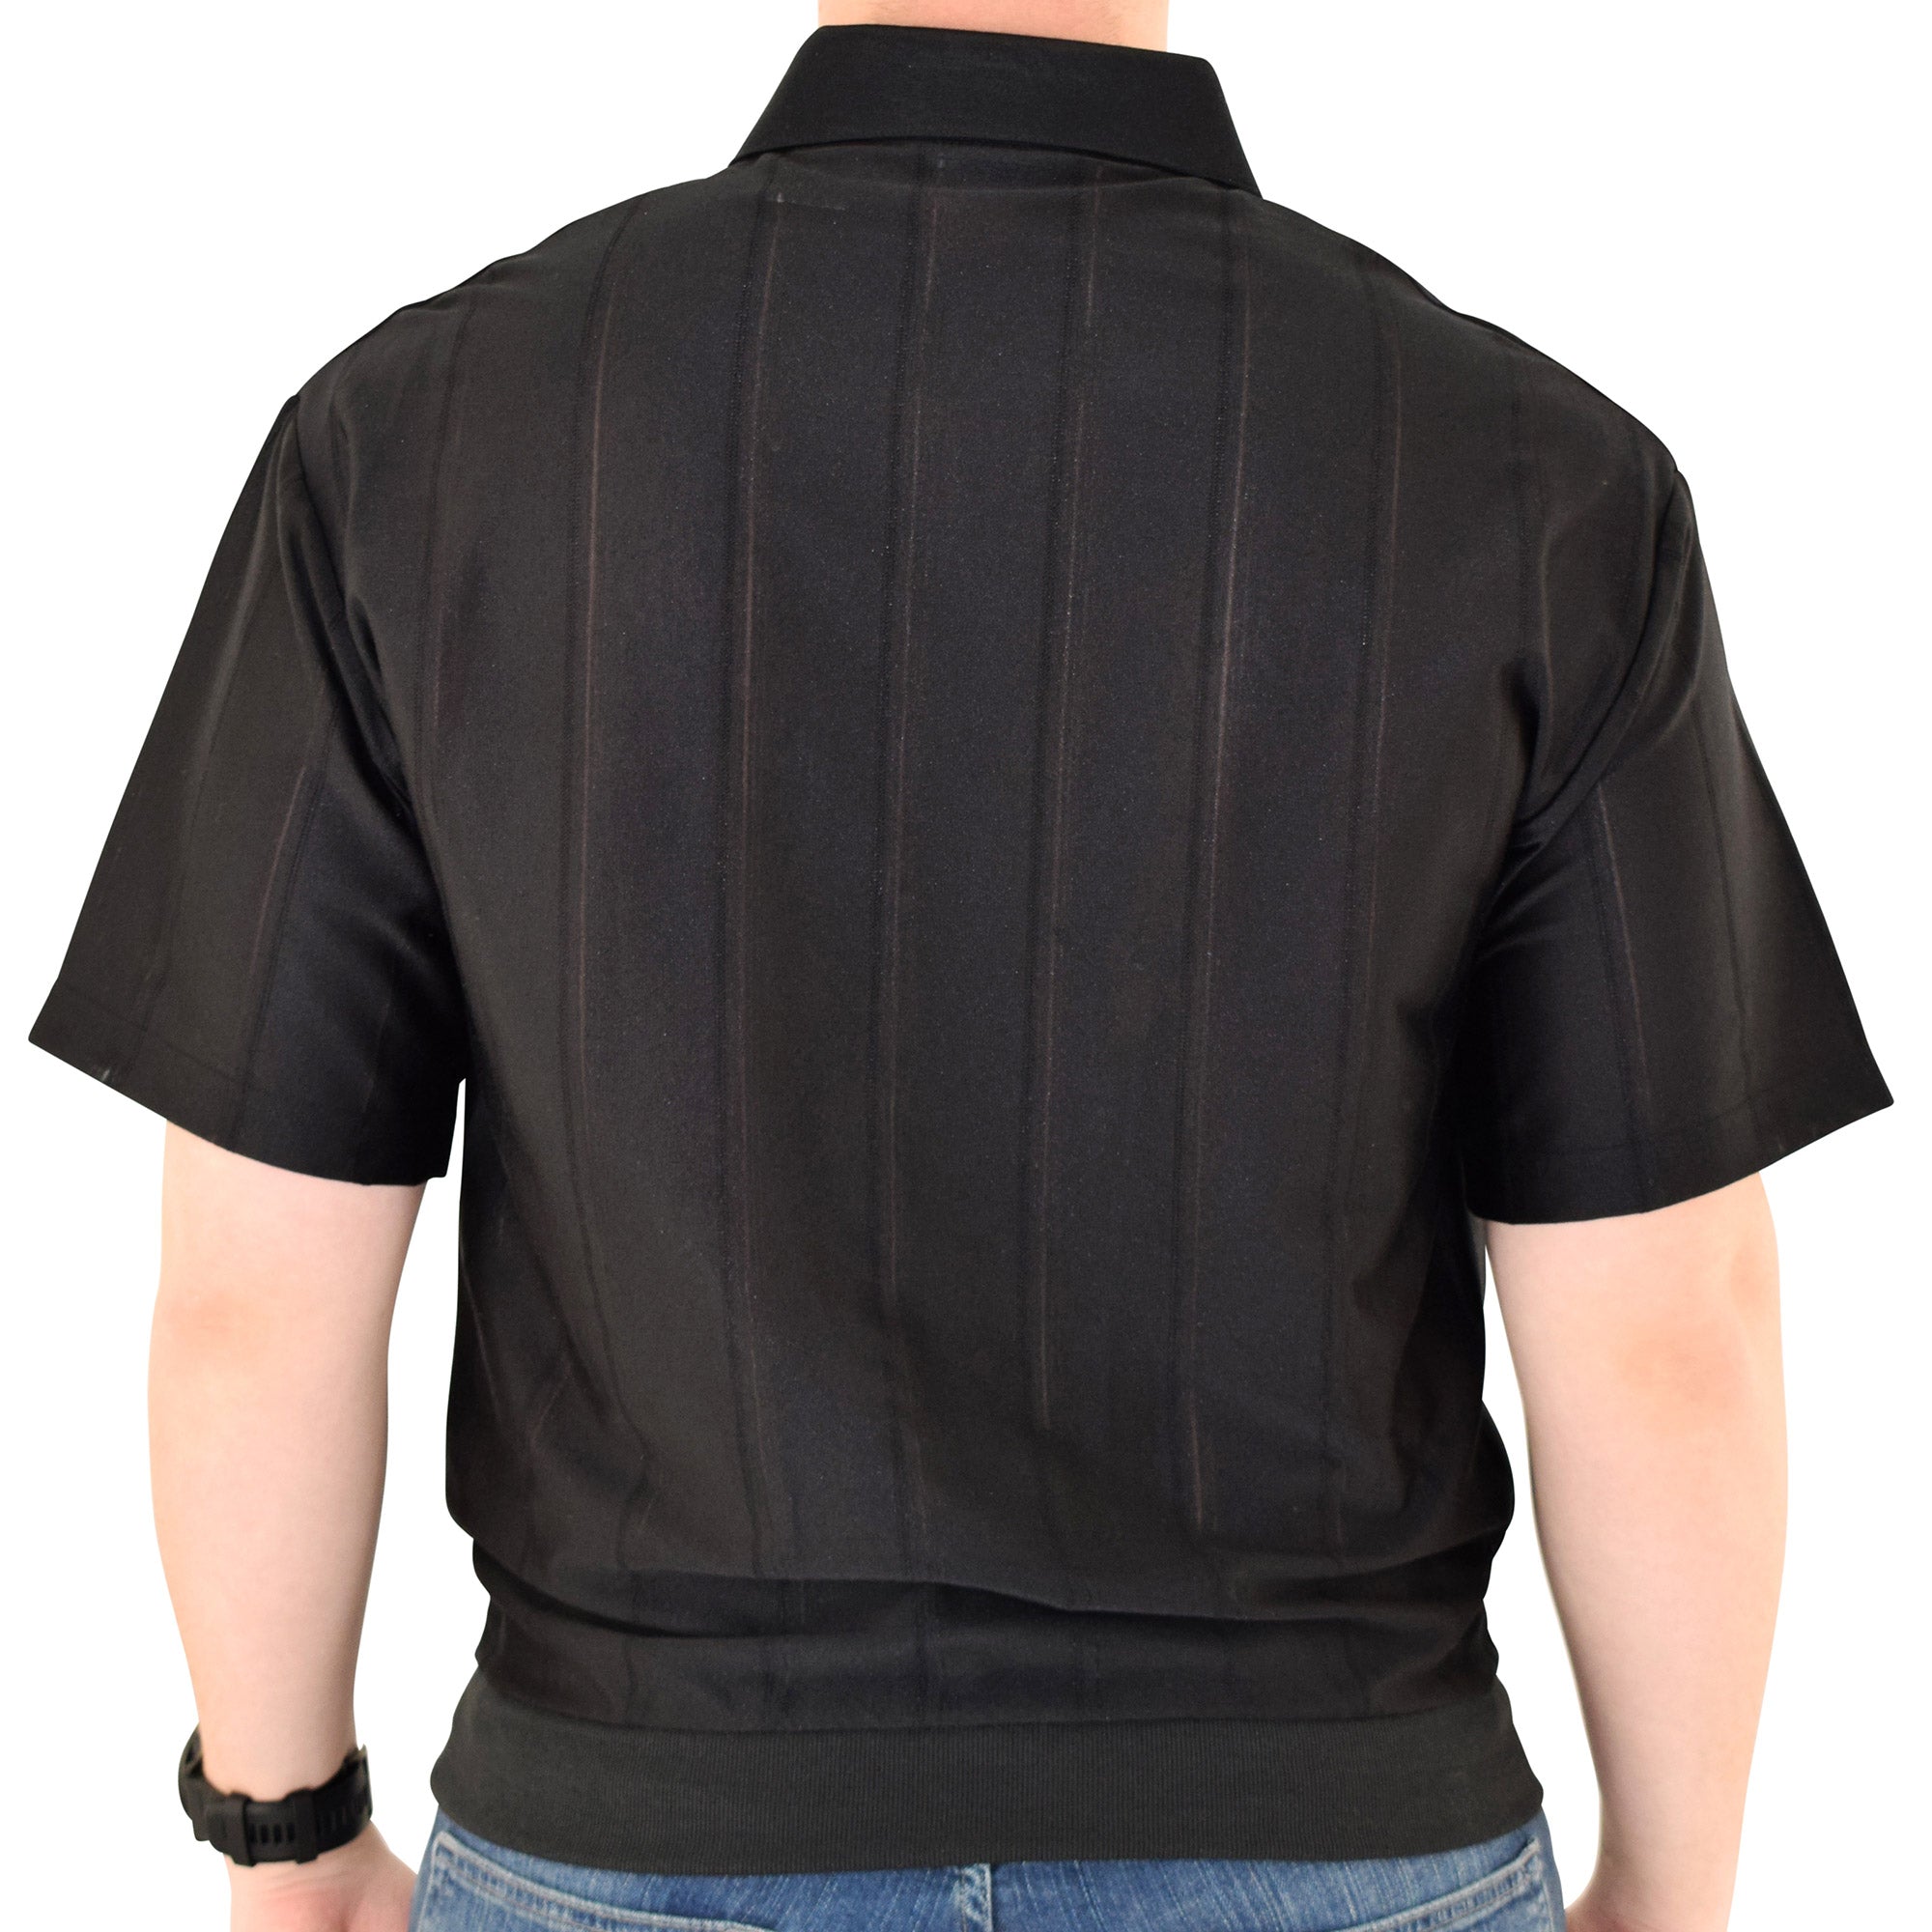 Big and Tall Tone on Tone Textured Knit Short Sleeve Banded Bottom Shirt - 6010-16BT-Black - theflagshirt